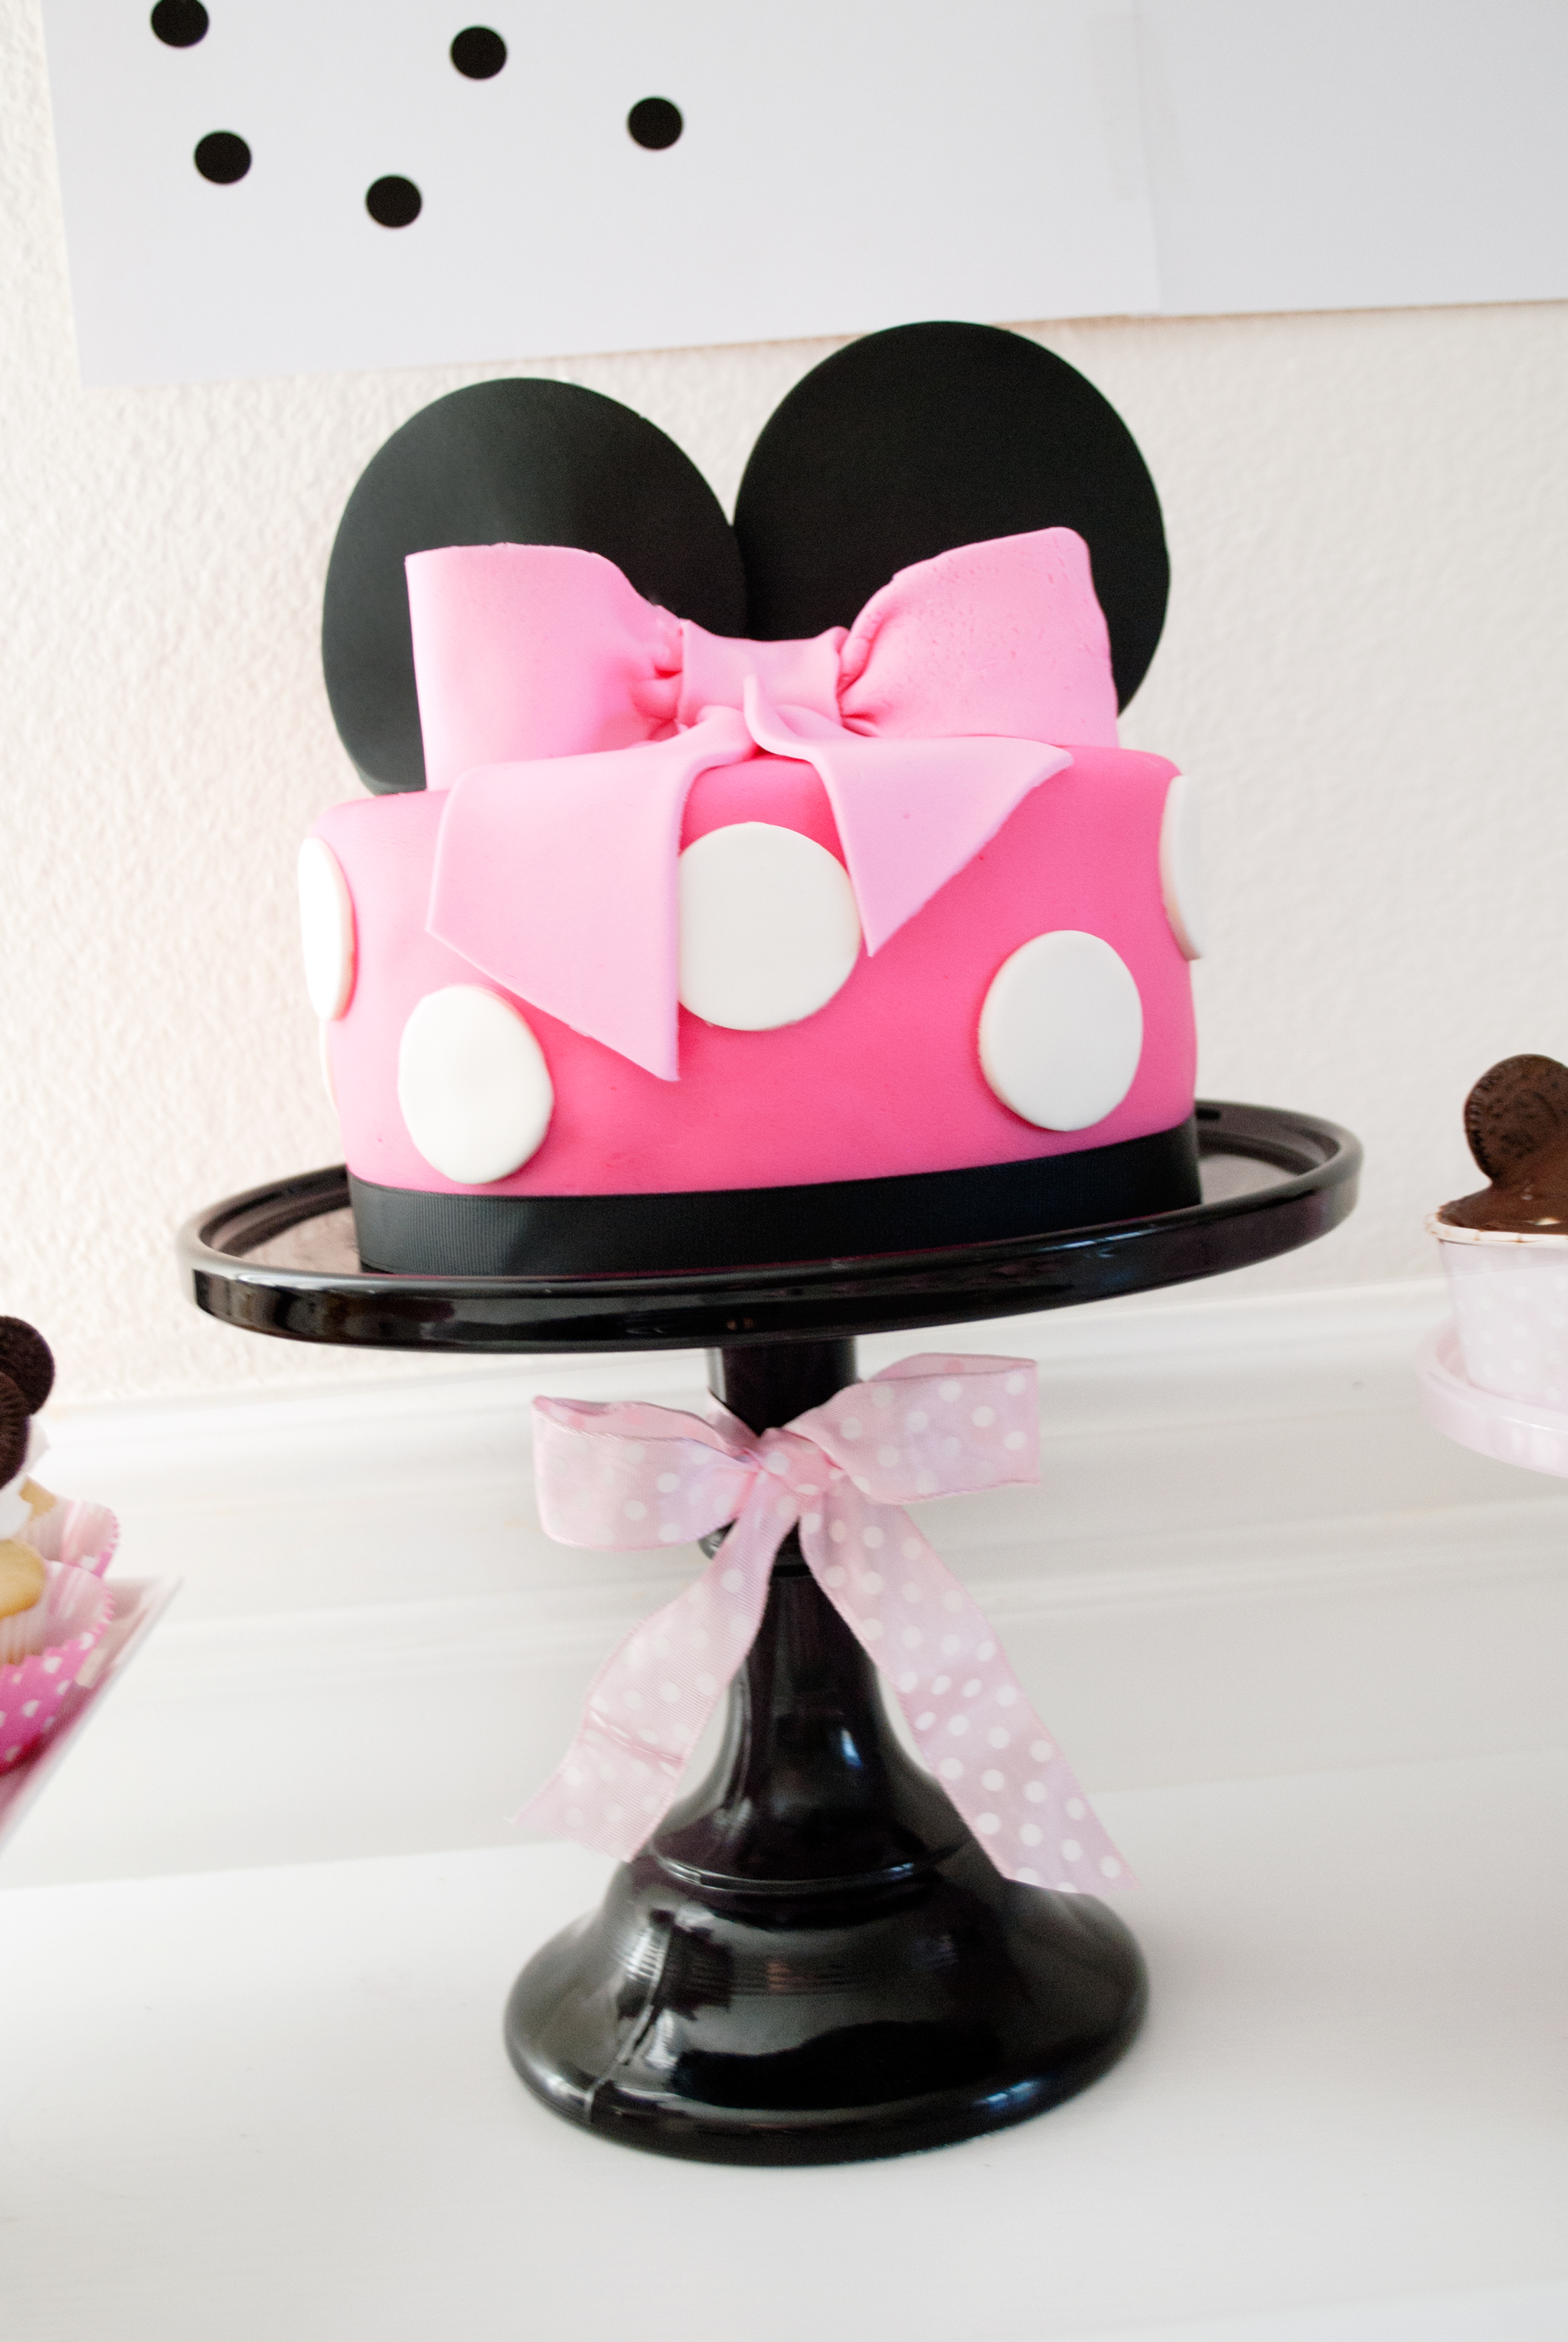 Minnie Mouse Bowtique Birthday Cake